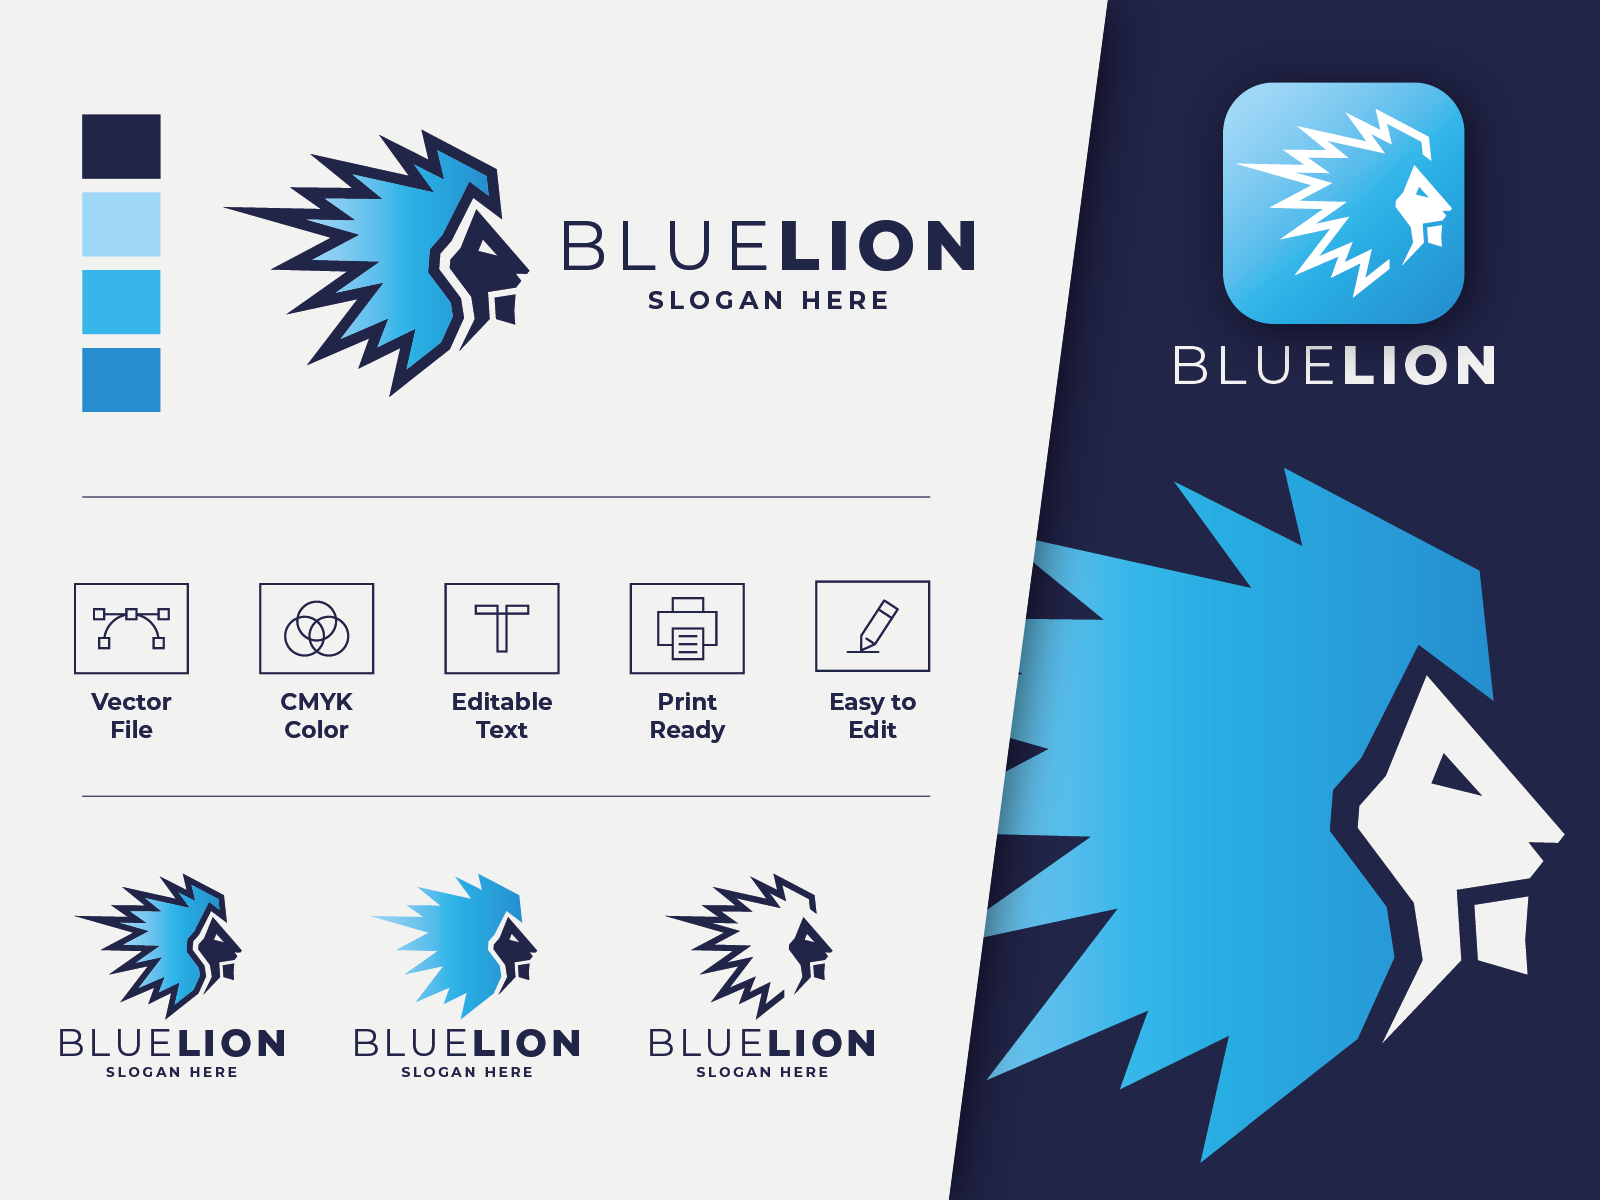 Download Lion - Lion Logo Blue PNG Image with No Background - PNGkey.com